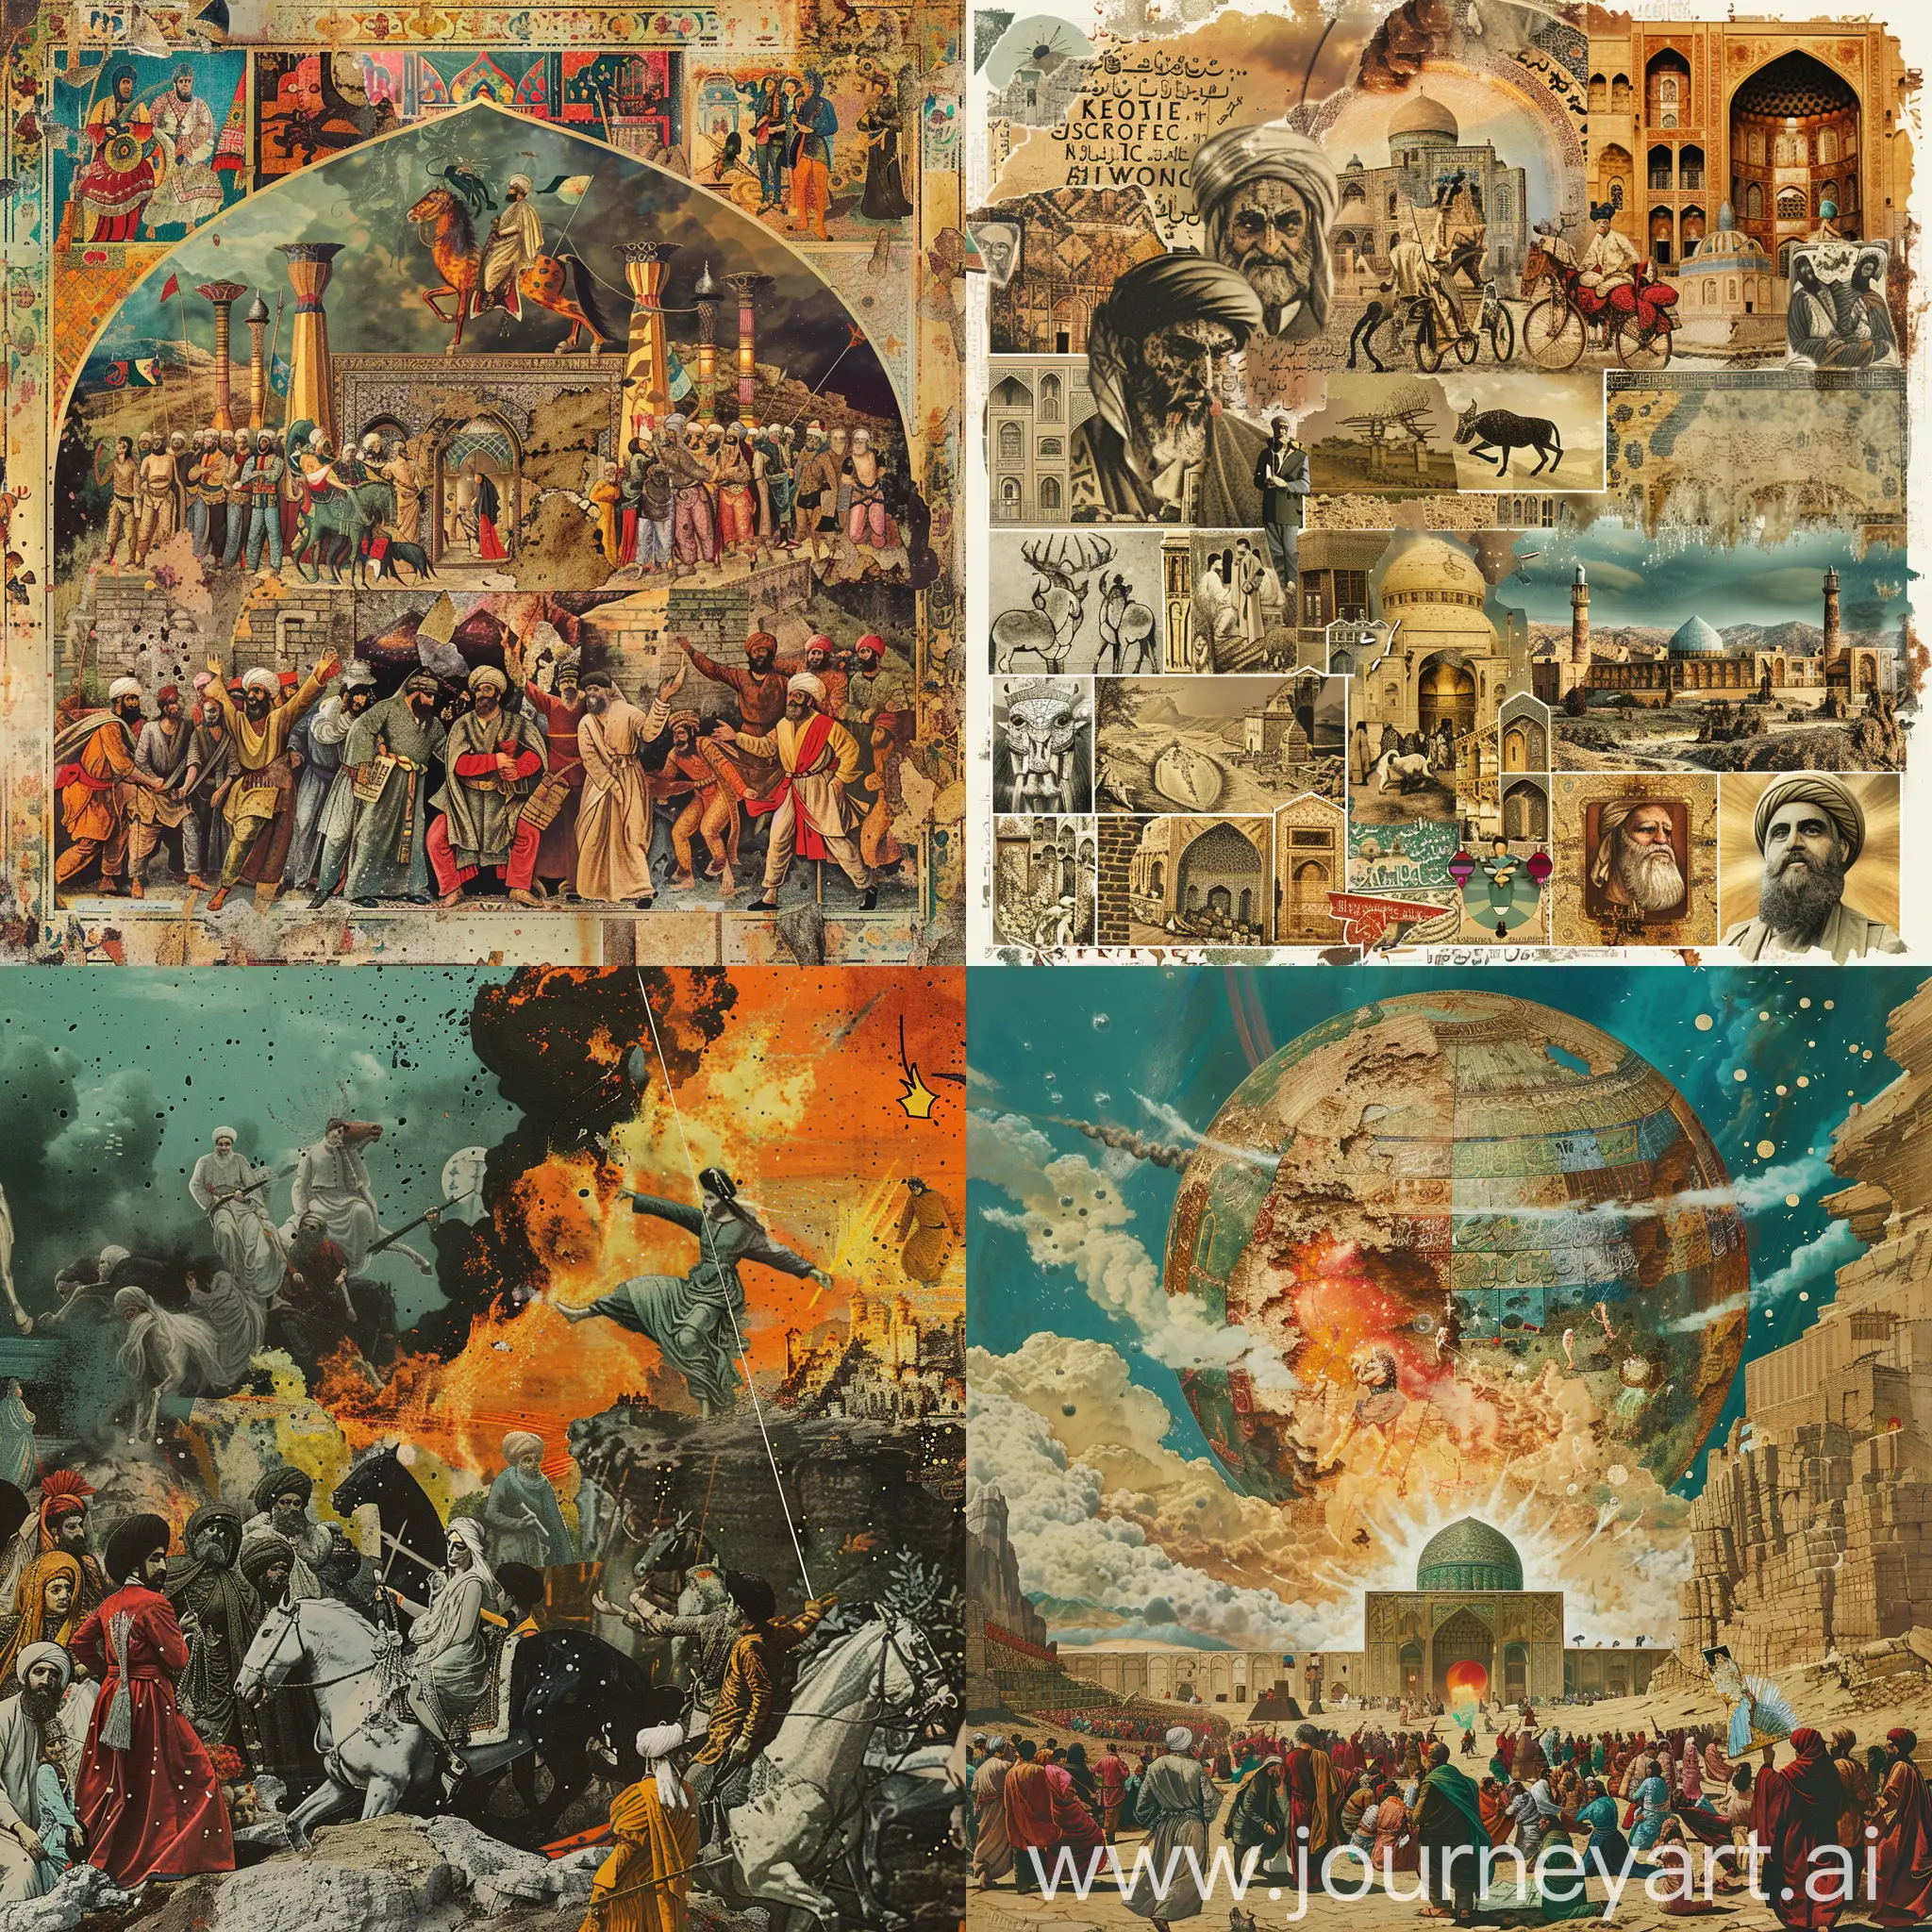 Iranian-Historical-Symbols-Collage-Modernity-Struggles-and-Mythological-Disconnect